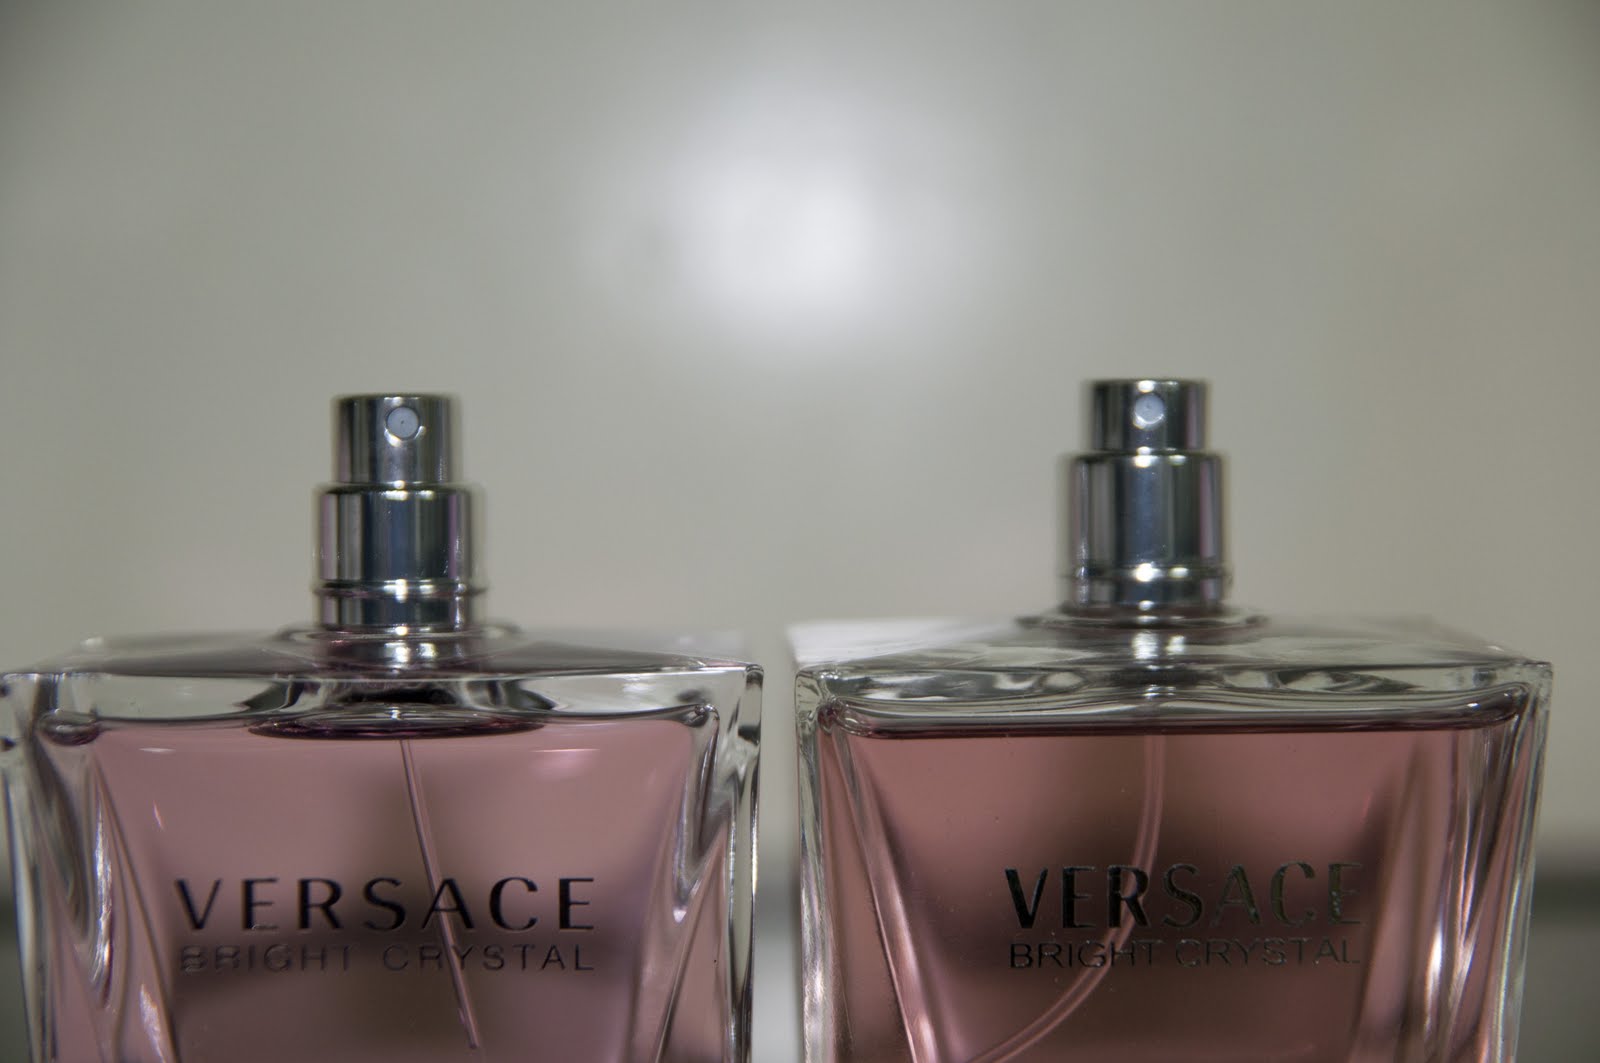 versace perfume fake vs real